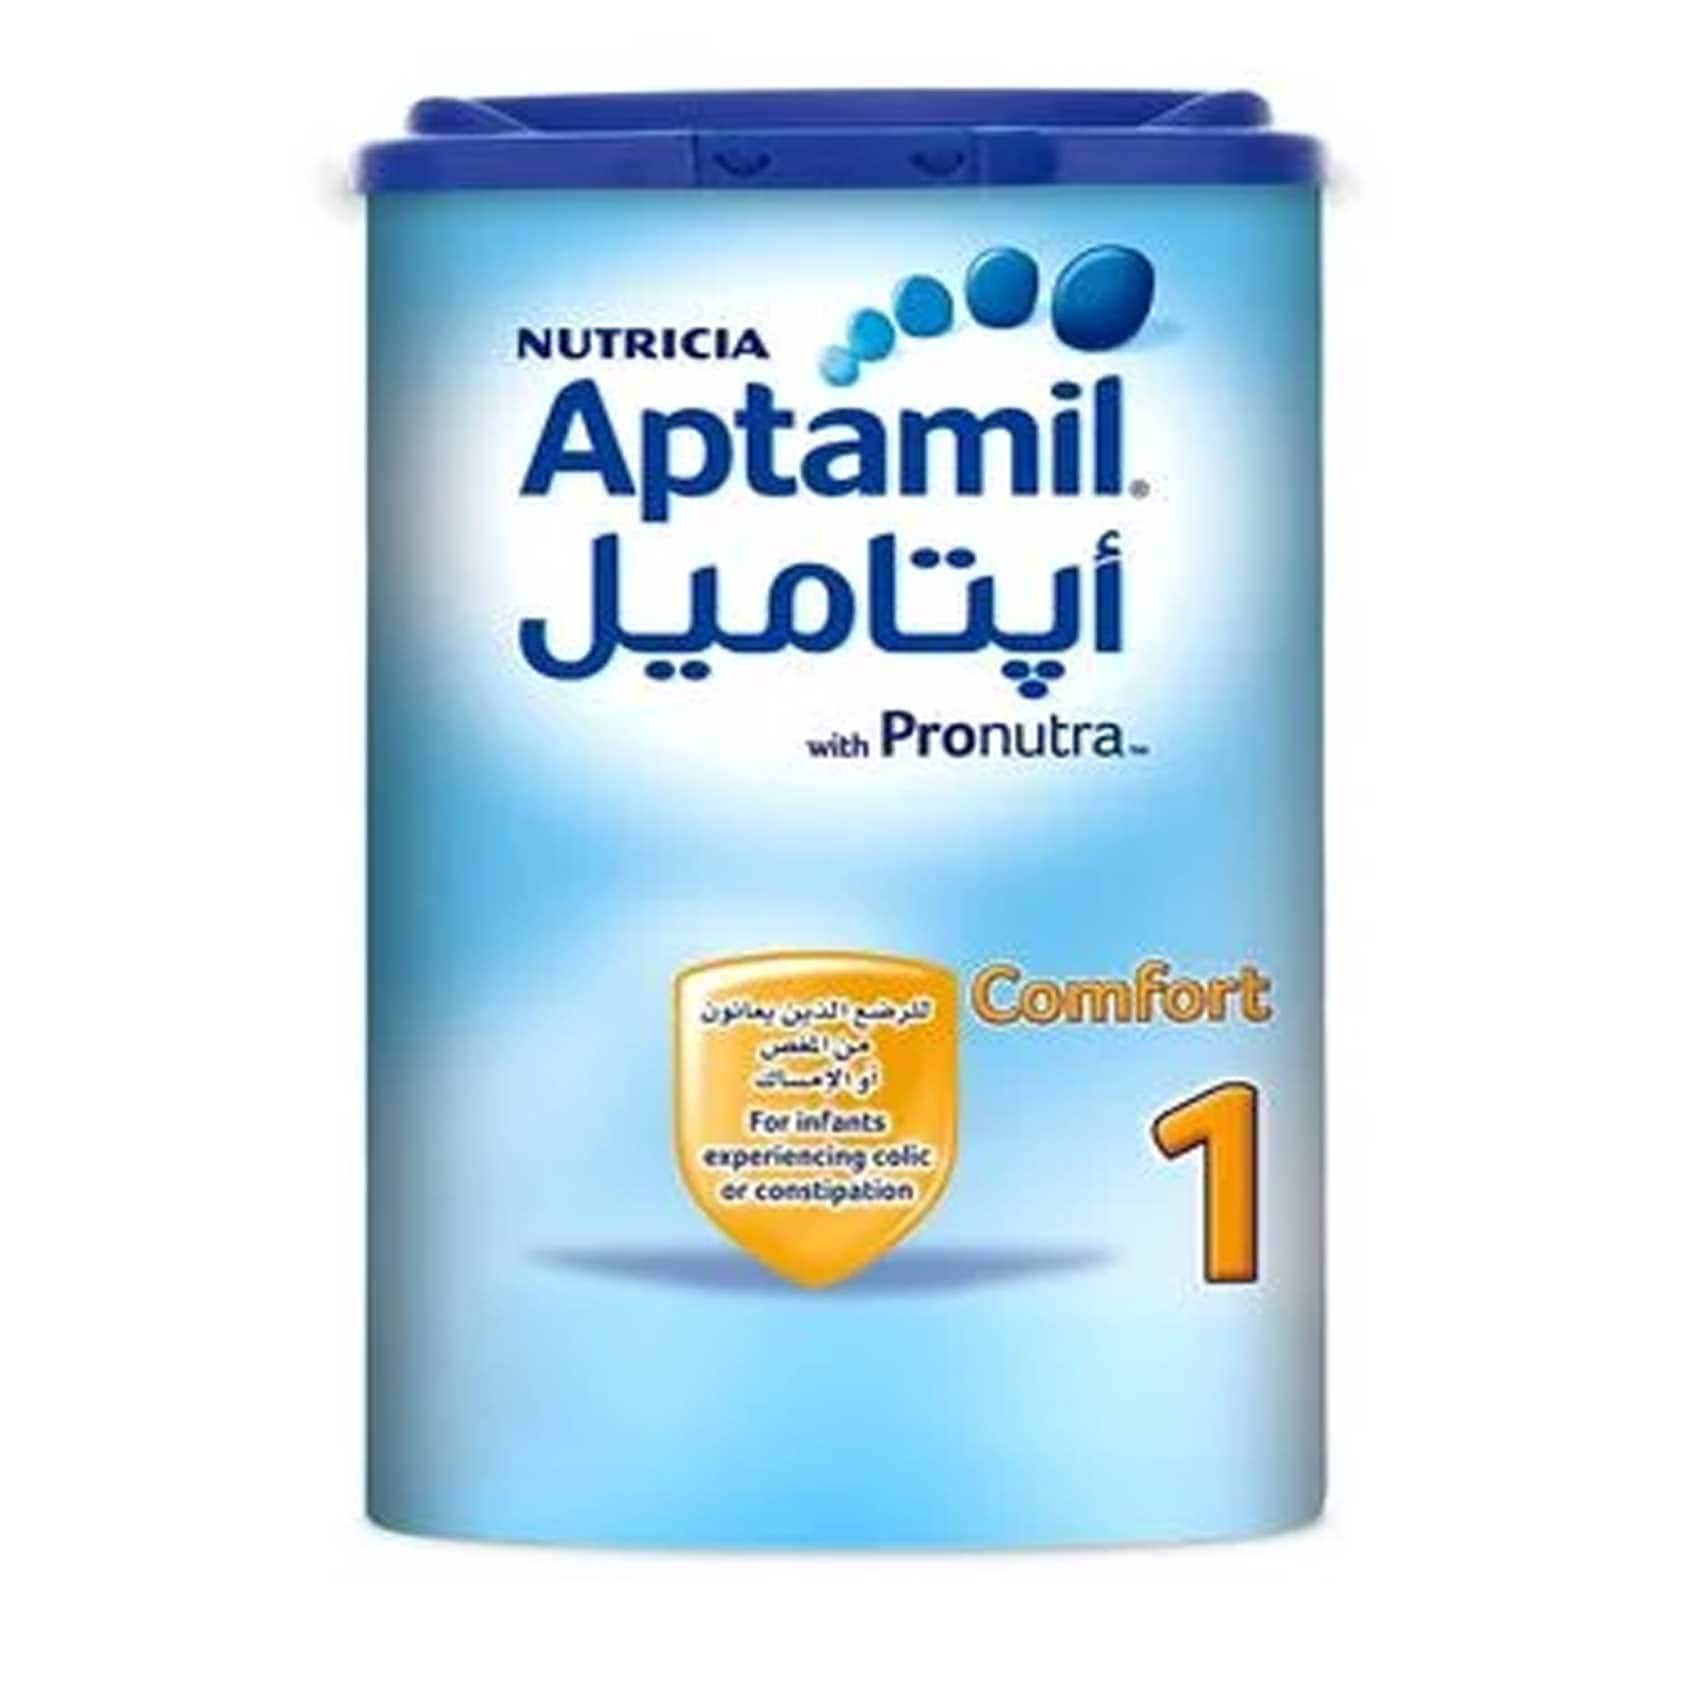 aptamil comfort price